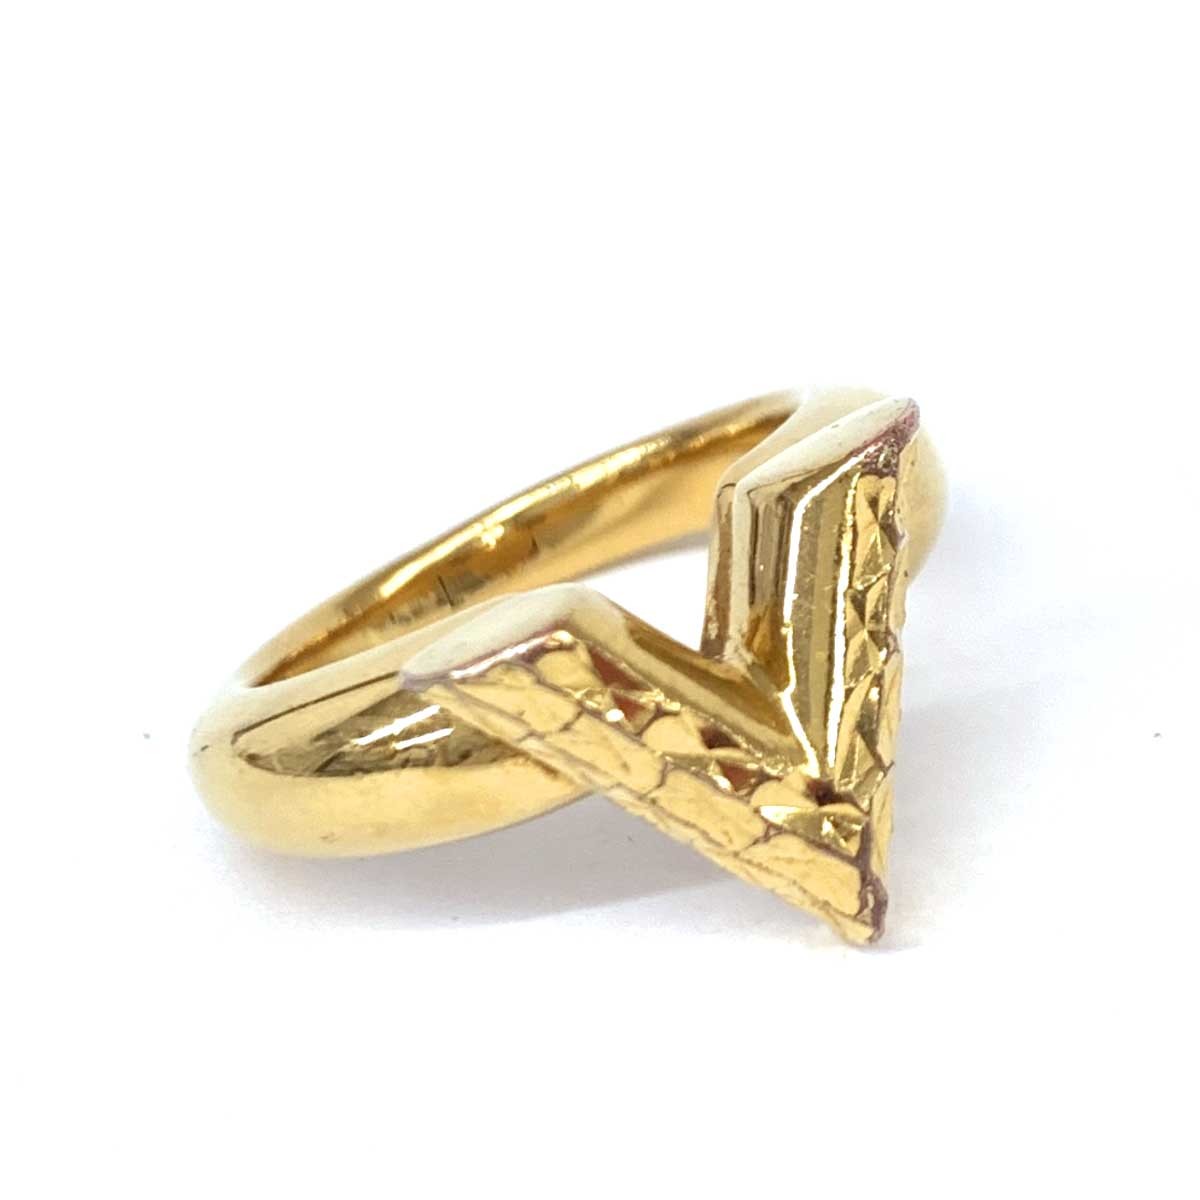 *LOUIS VUITTON Louis Vuitton Esse n car ru ring LS size *M67445 LE0178 Gold color lady's ring accessory accessory 